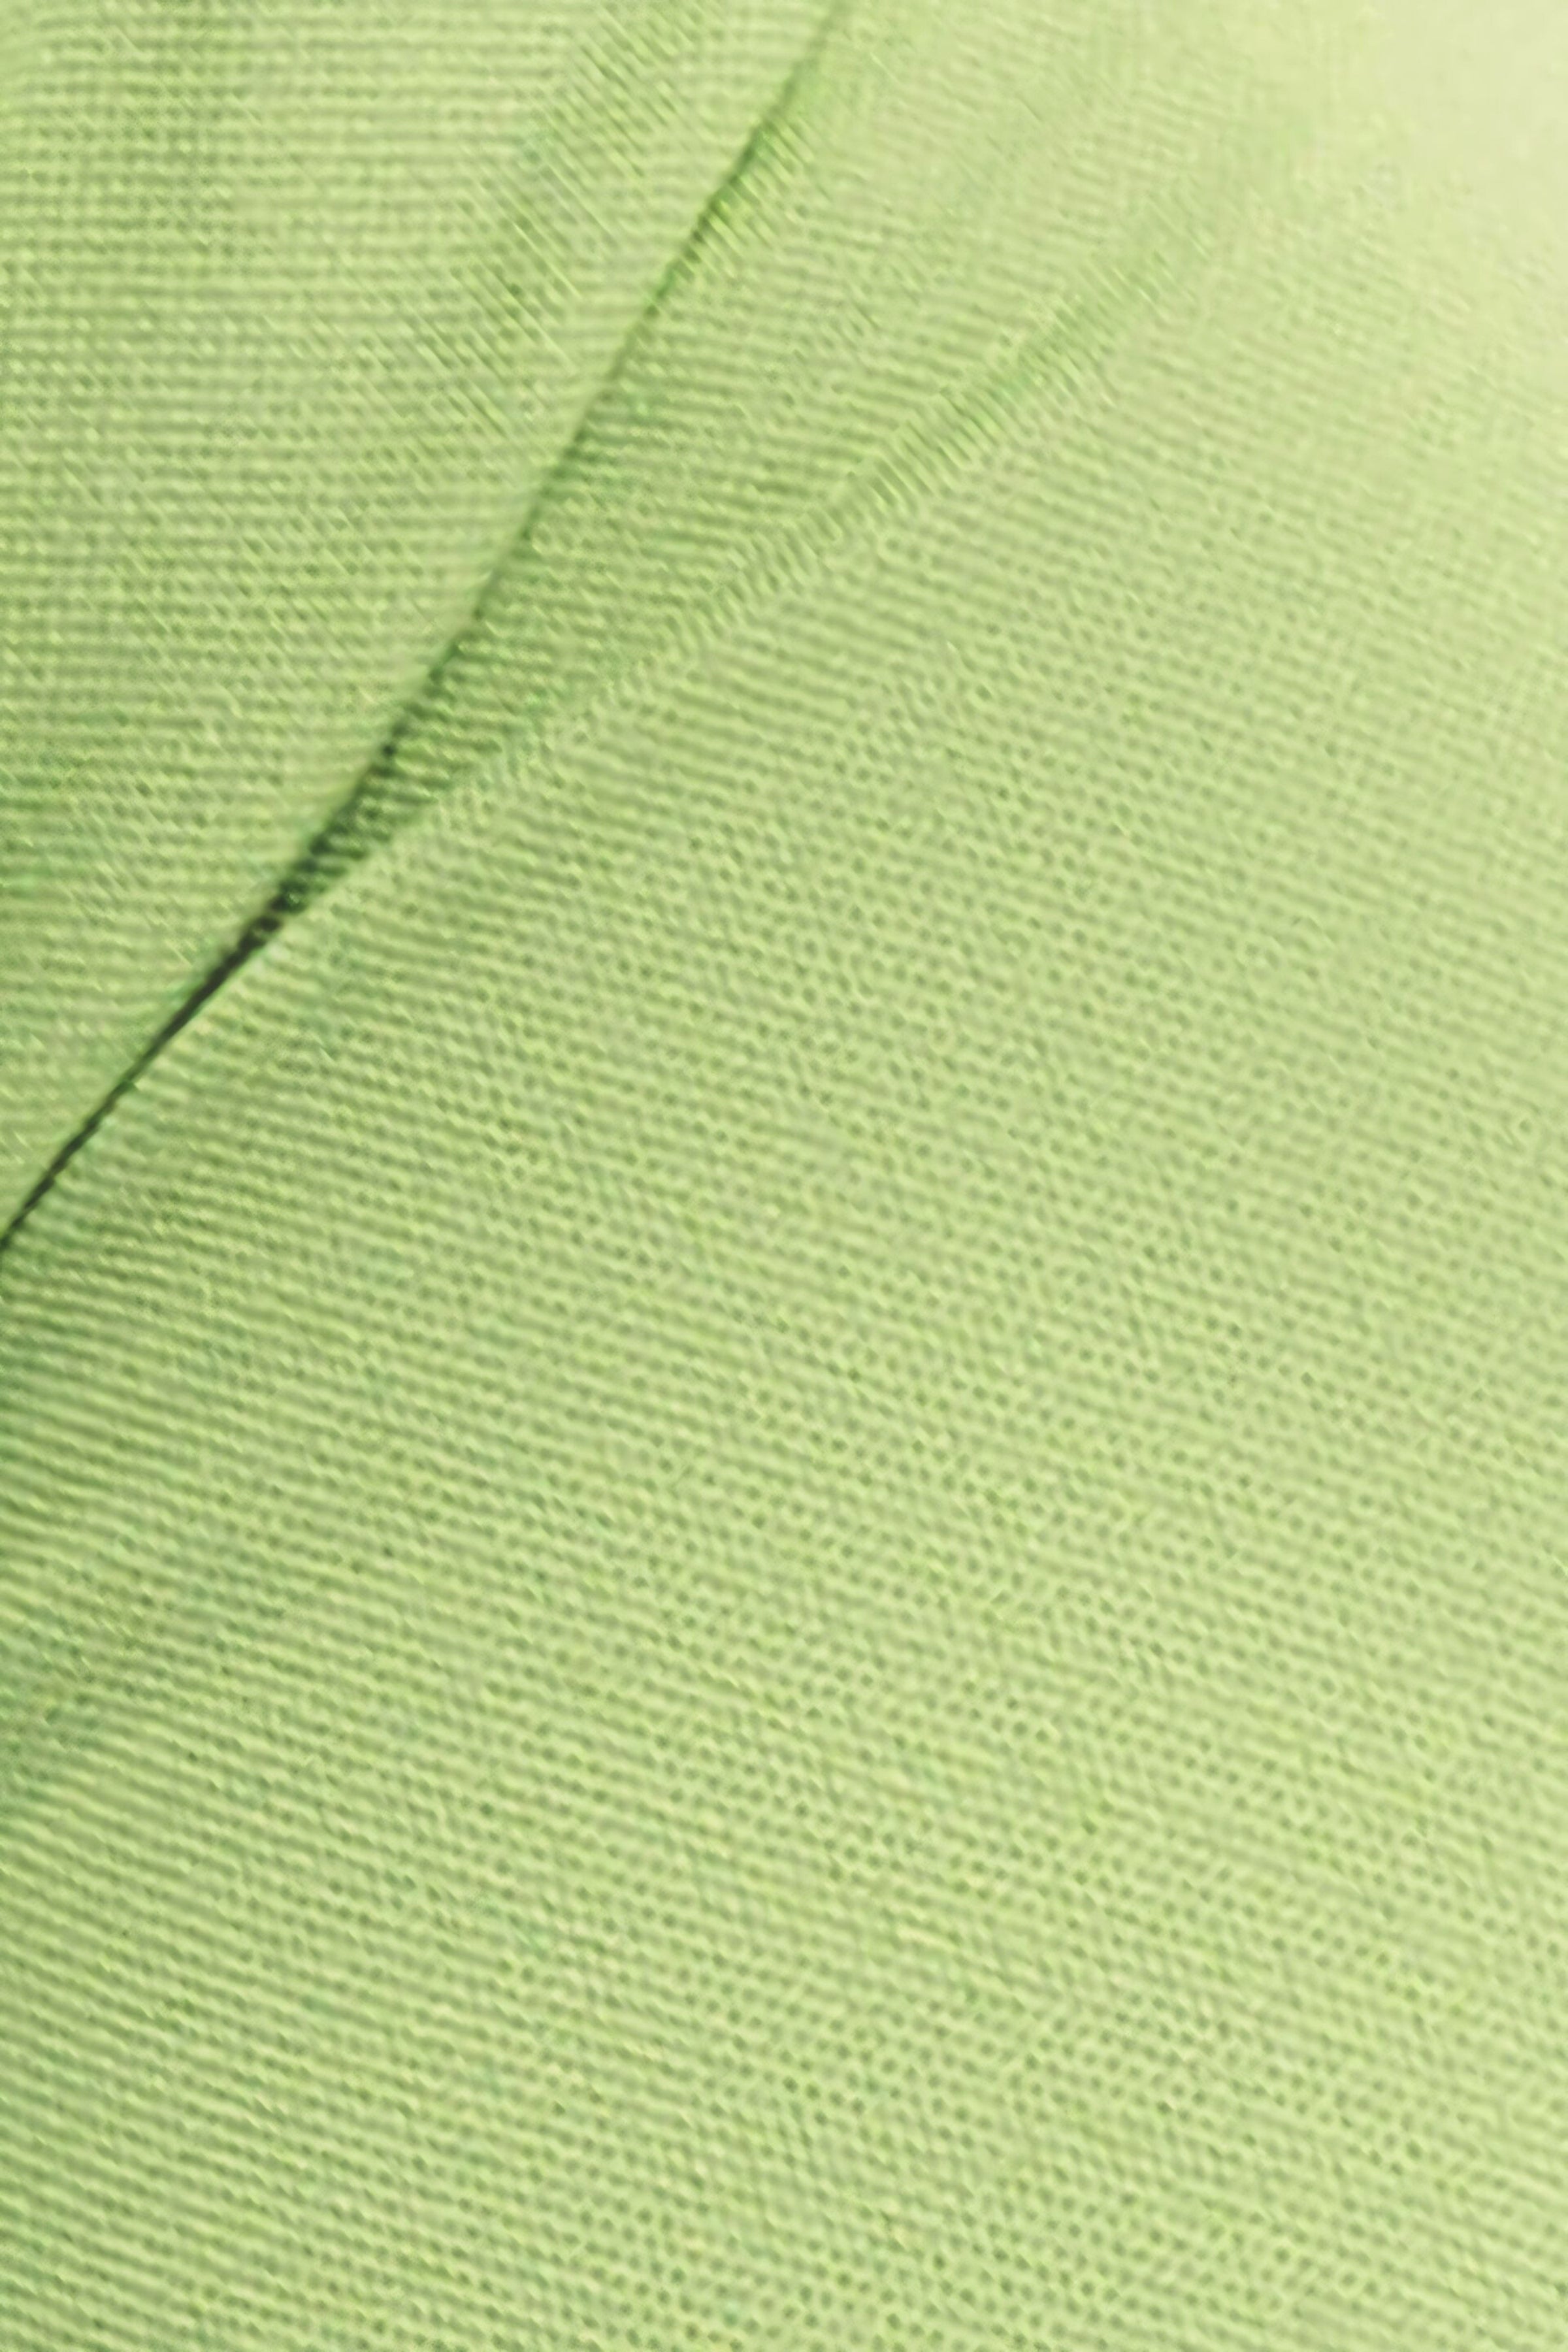 EQL Apparel fabric material, EQLSeamless